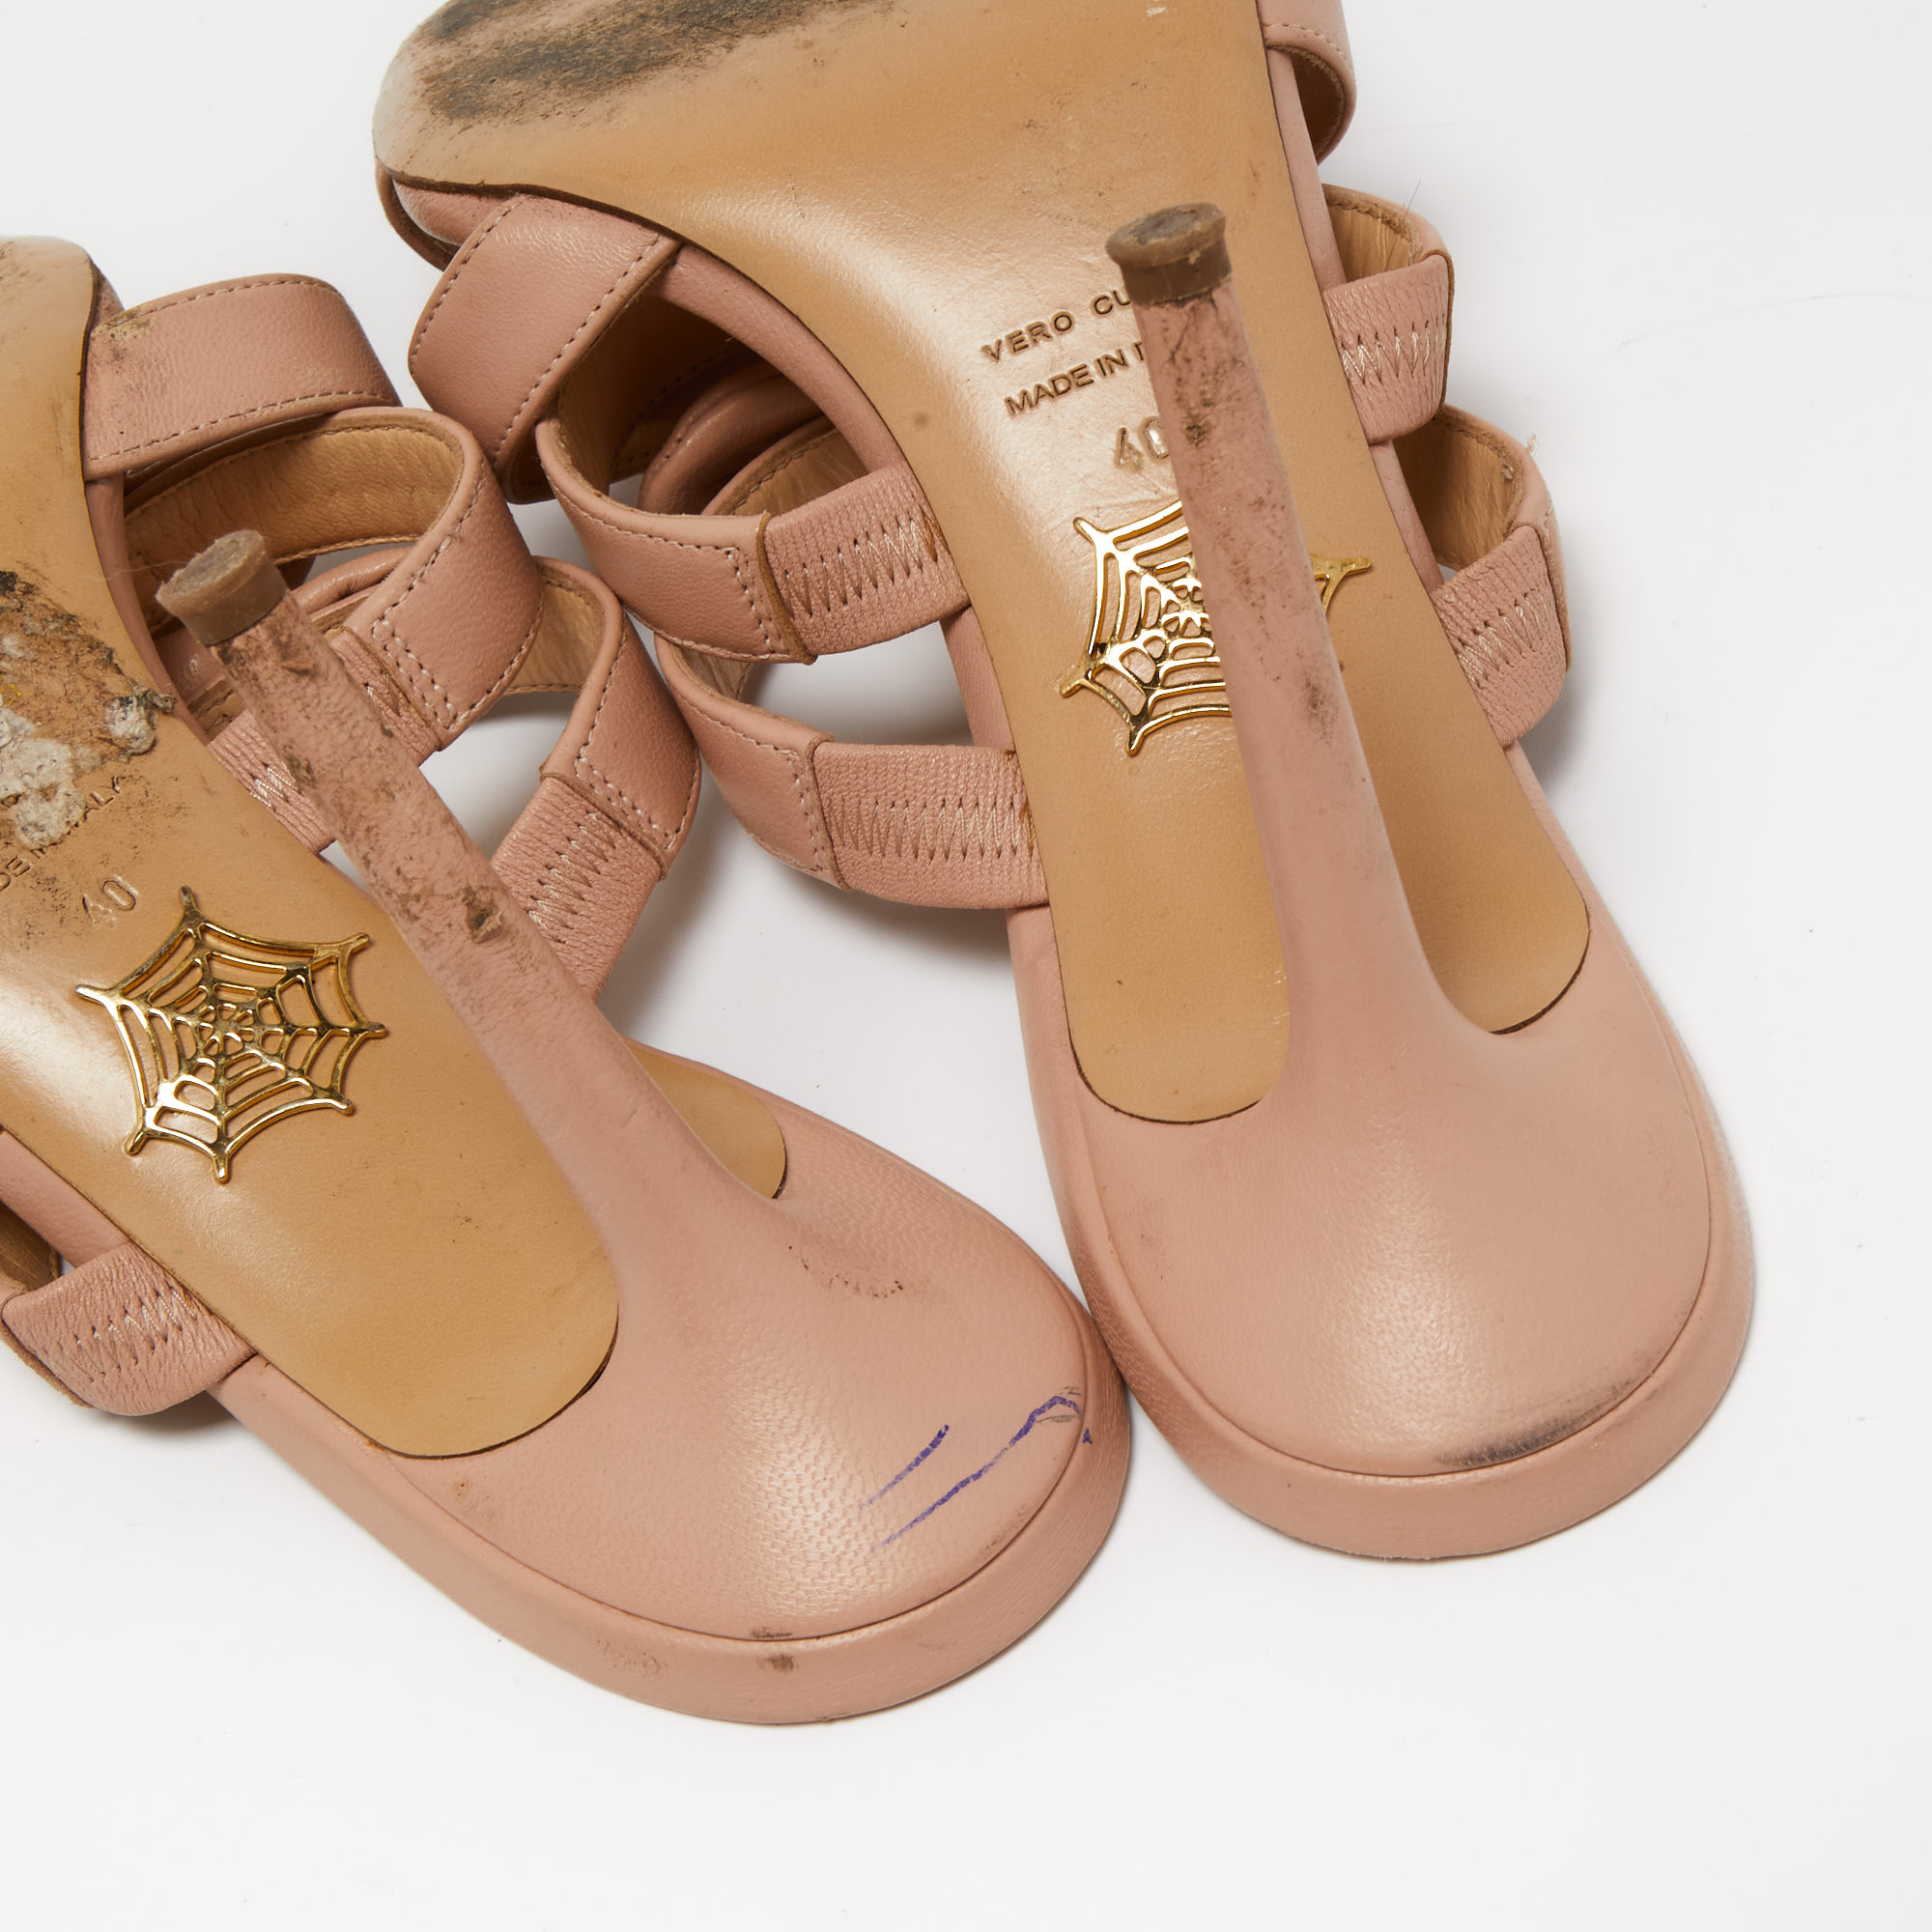 Charlotte Olympia Light Pink Leather Blyton Bow Slide Sandals Size 40